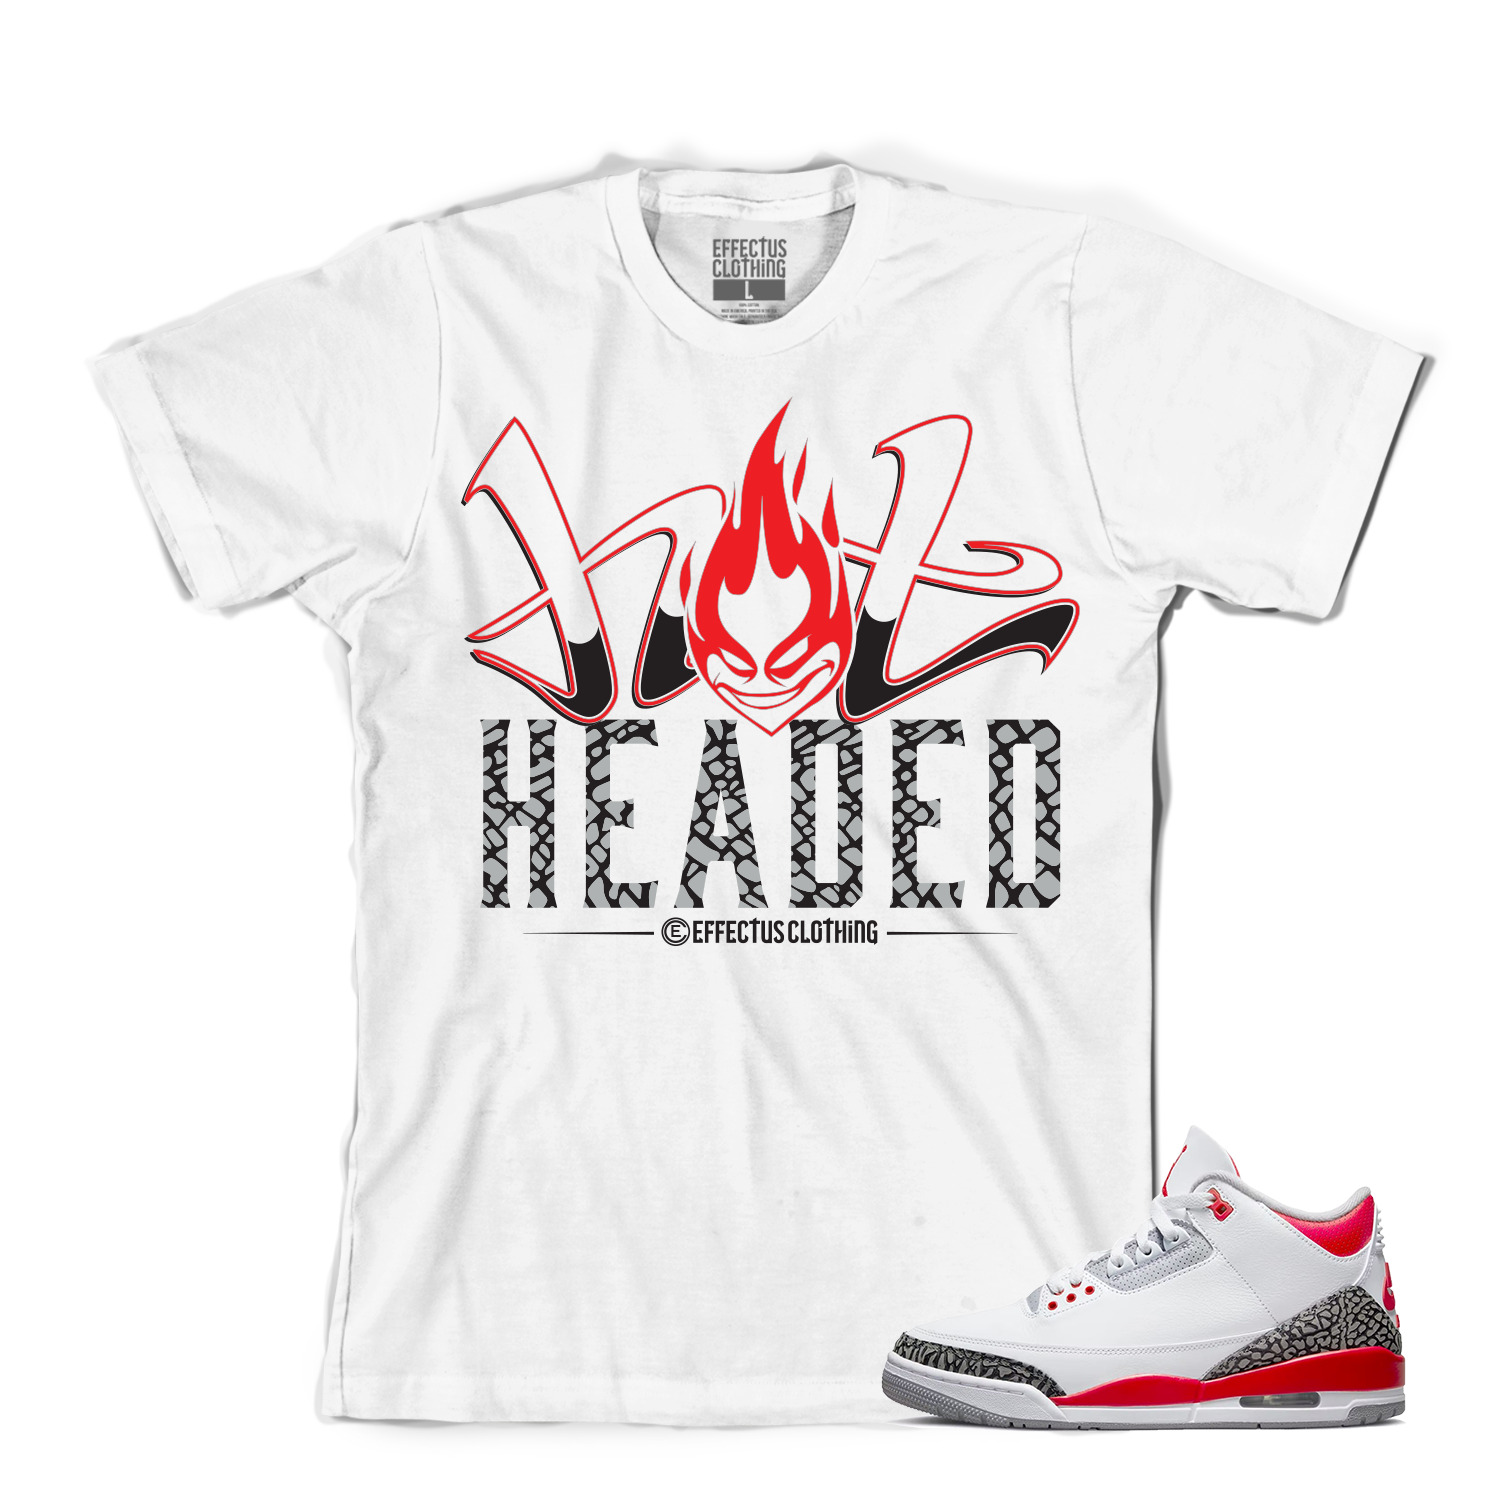 Tee to match Air Jordan Retro Fire Red Sneakers. Hot Headed Tee 